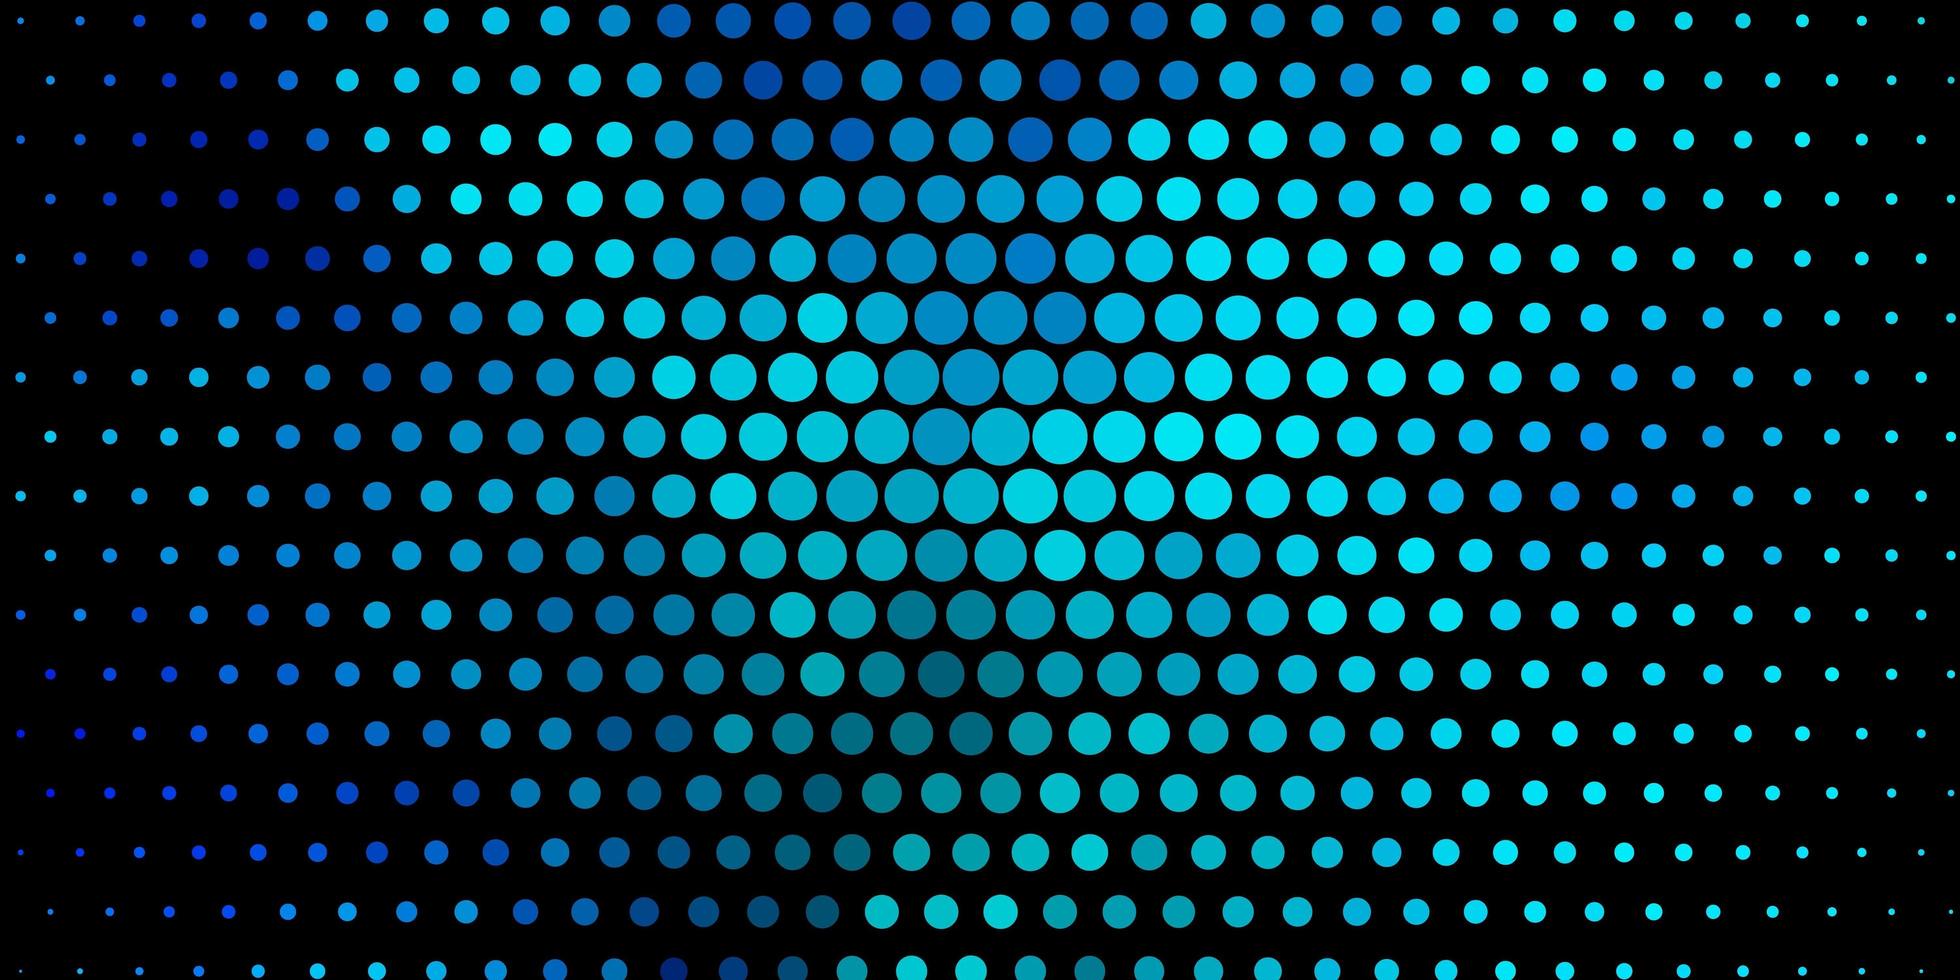 textura de vector azul oscuro con discos brillo ilustración abstracta con patrón de gotas de colores para cortinas de papel tapiz